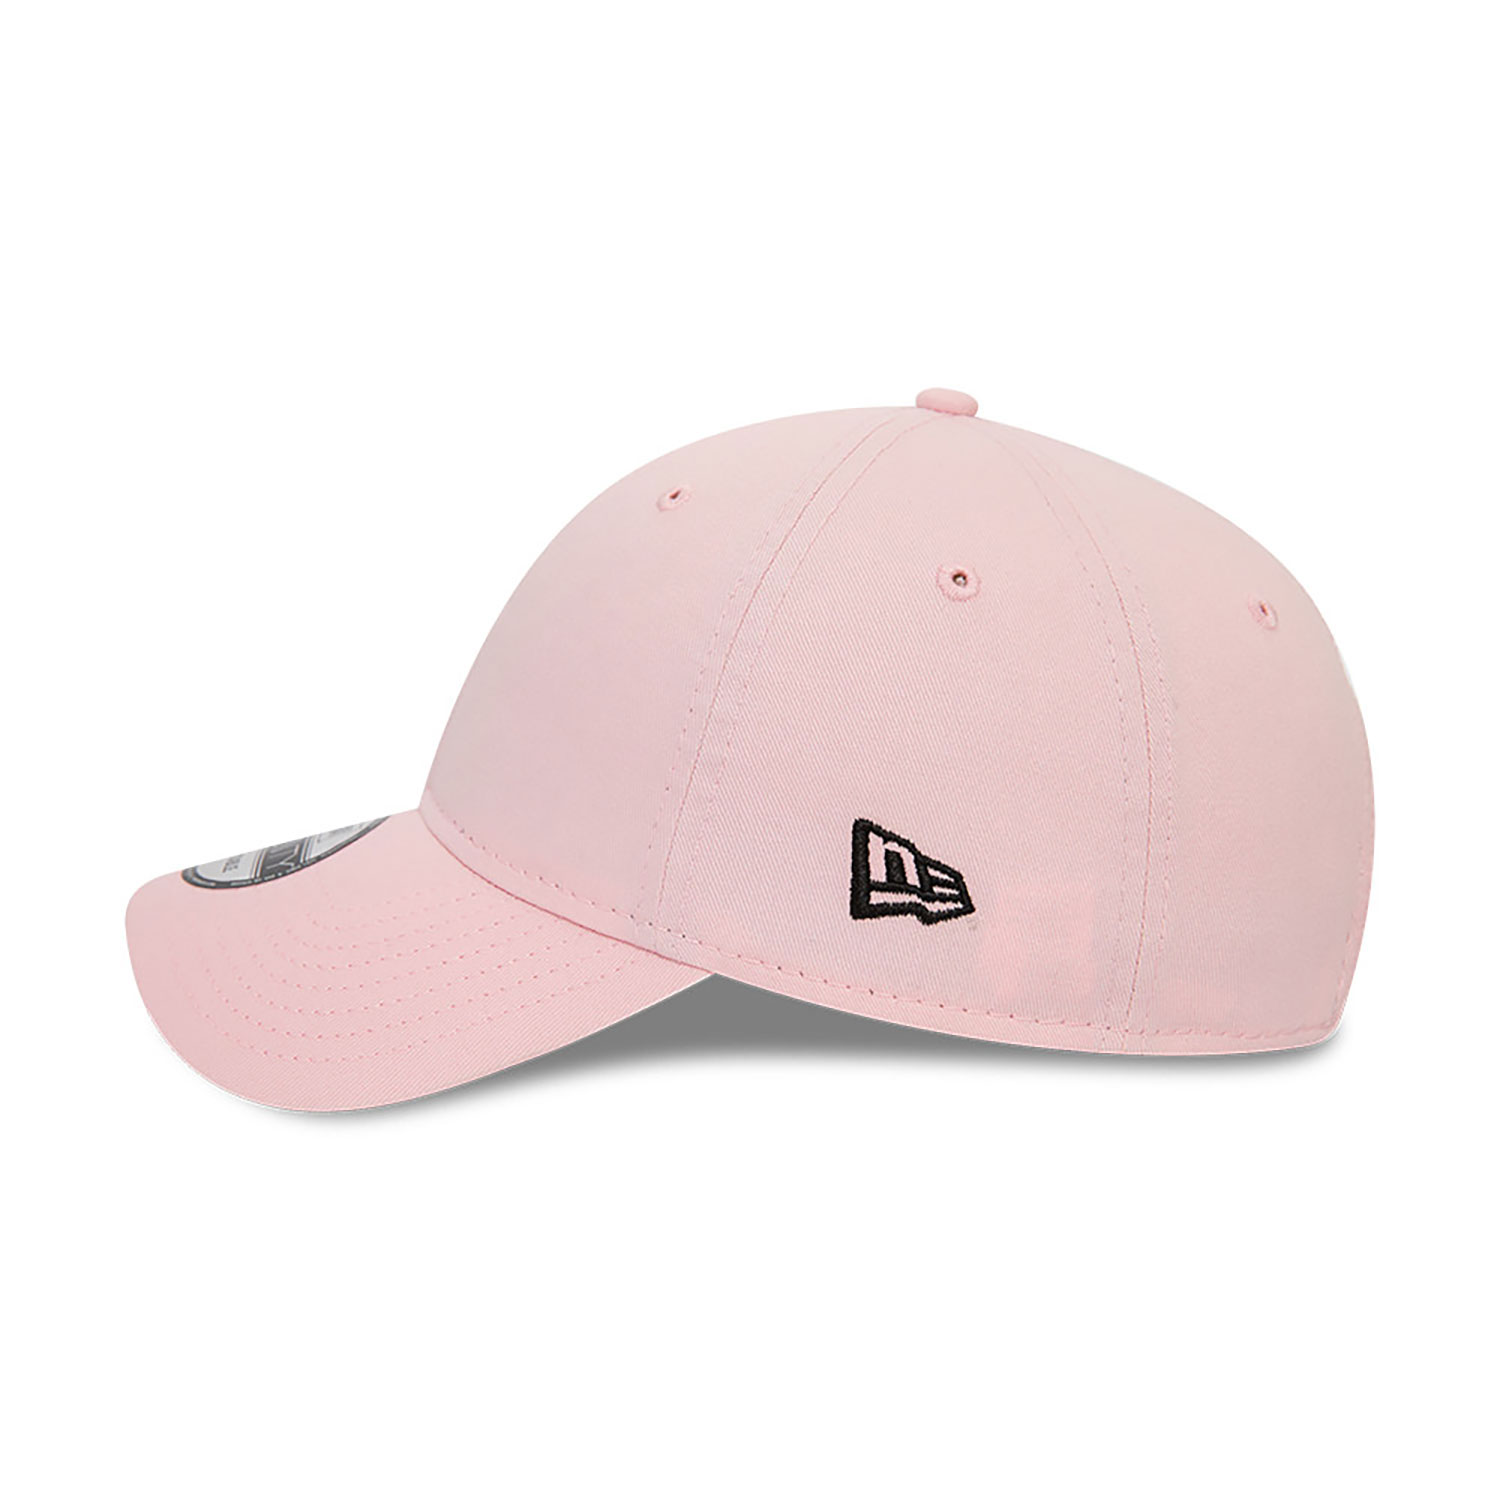 New Era Essential Pink 9TWENTY Adjustable Cap